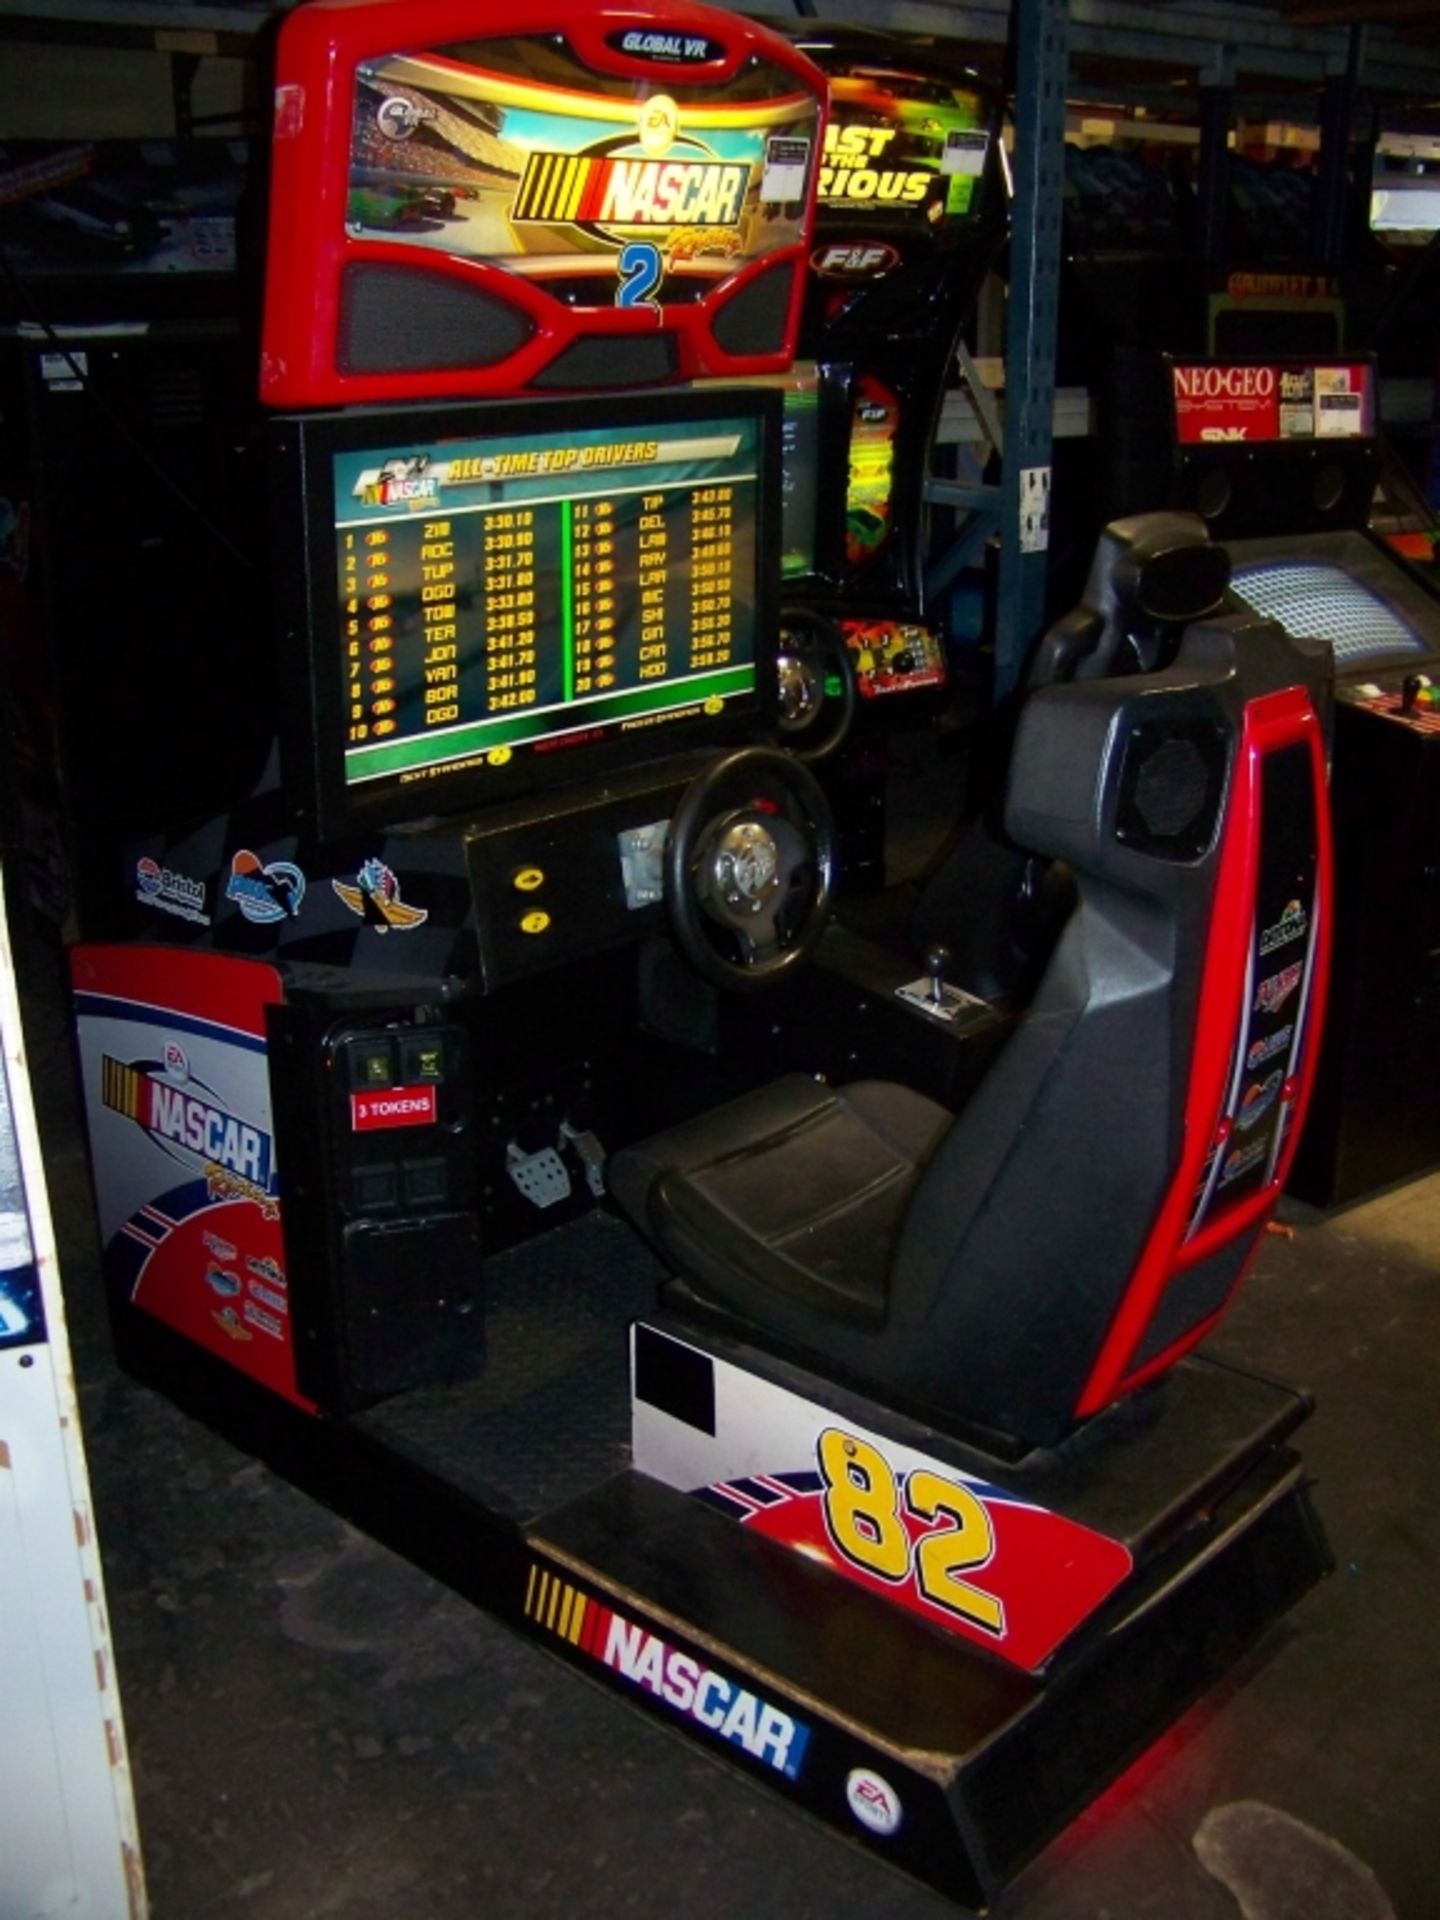 NASCAR RACING ARCADE GAME GLOBAL VR - Image 5 of 5